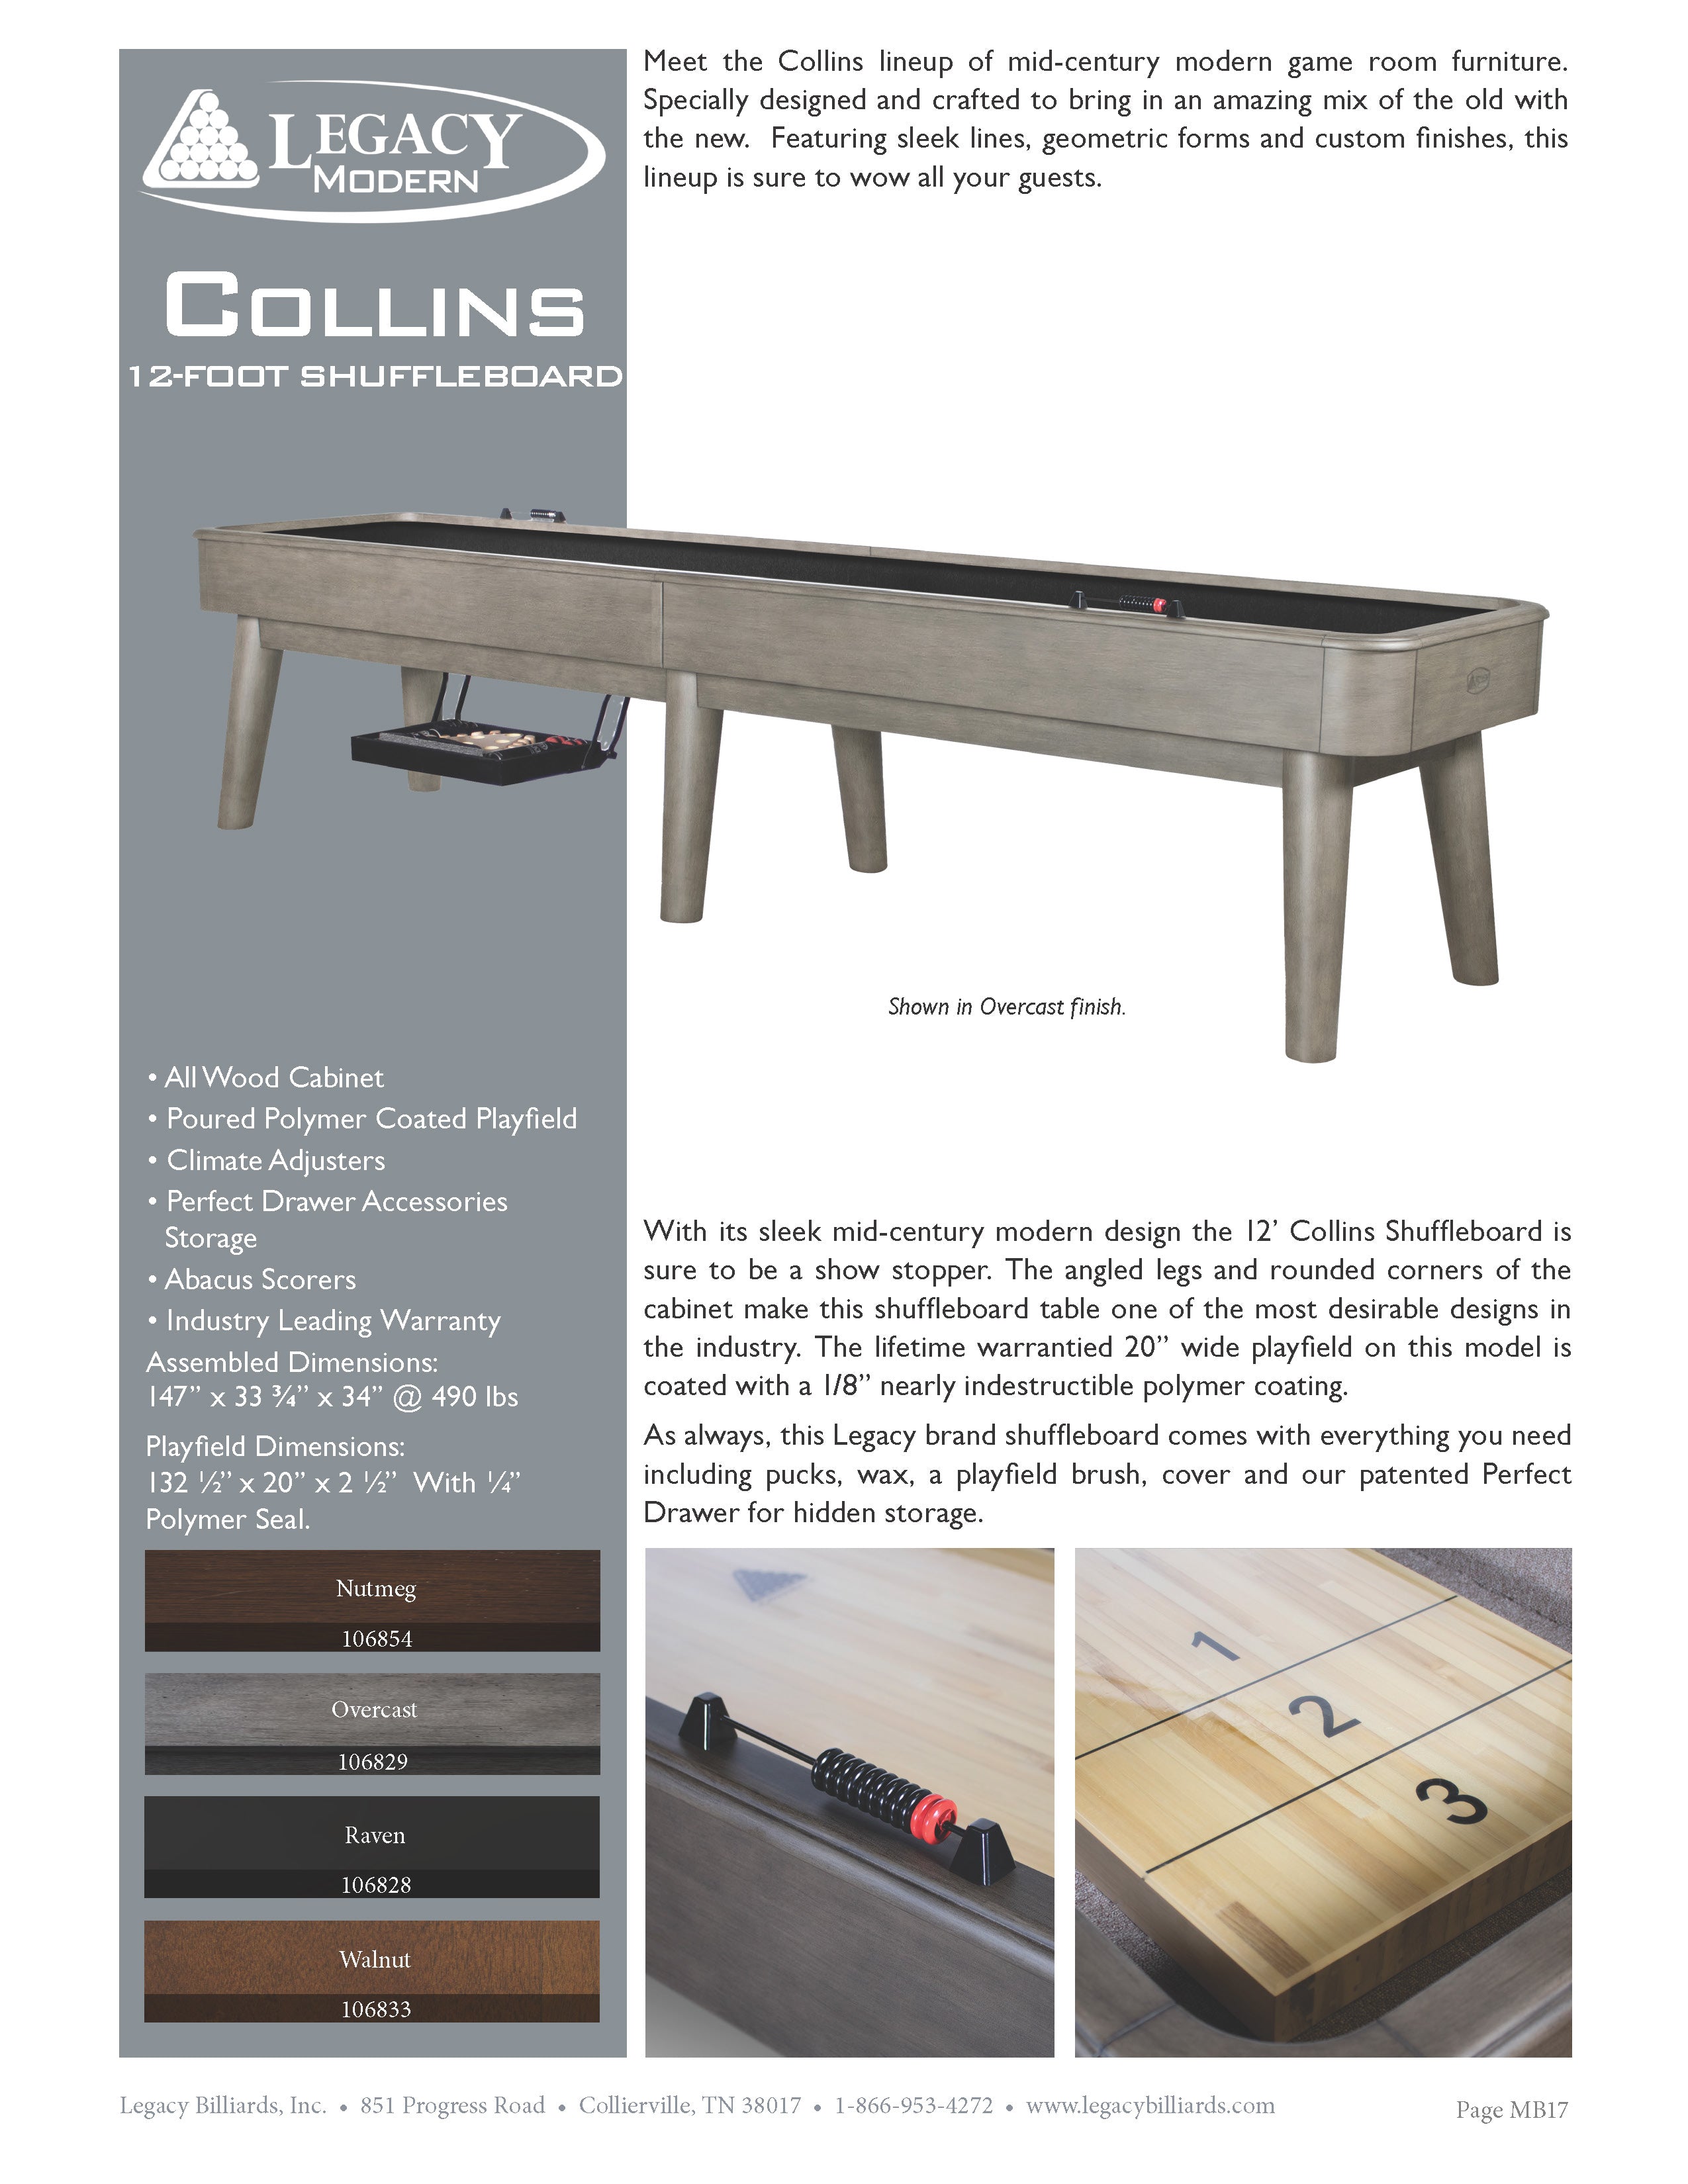 Collins 12' Shuffleboard Spec Sheet